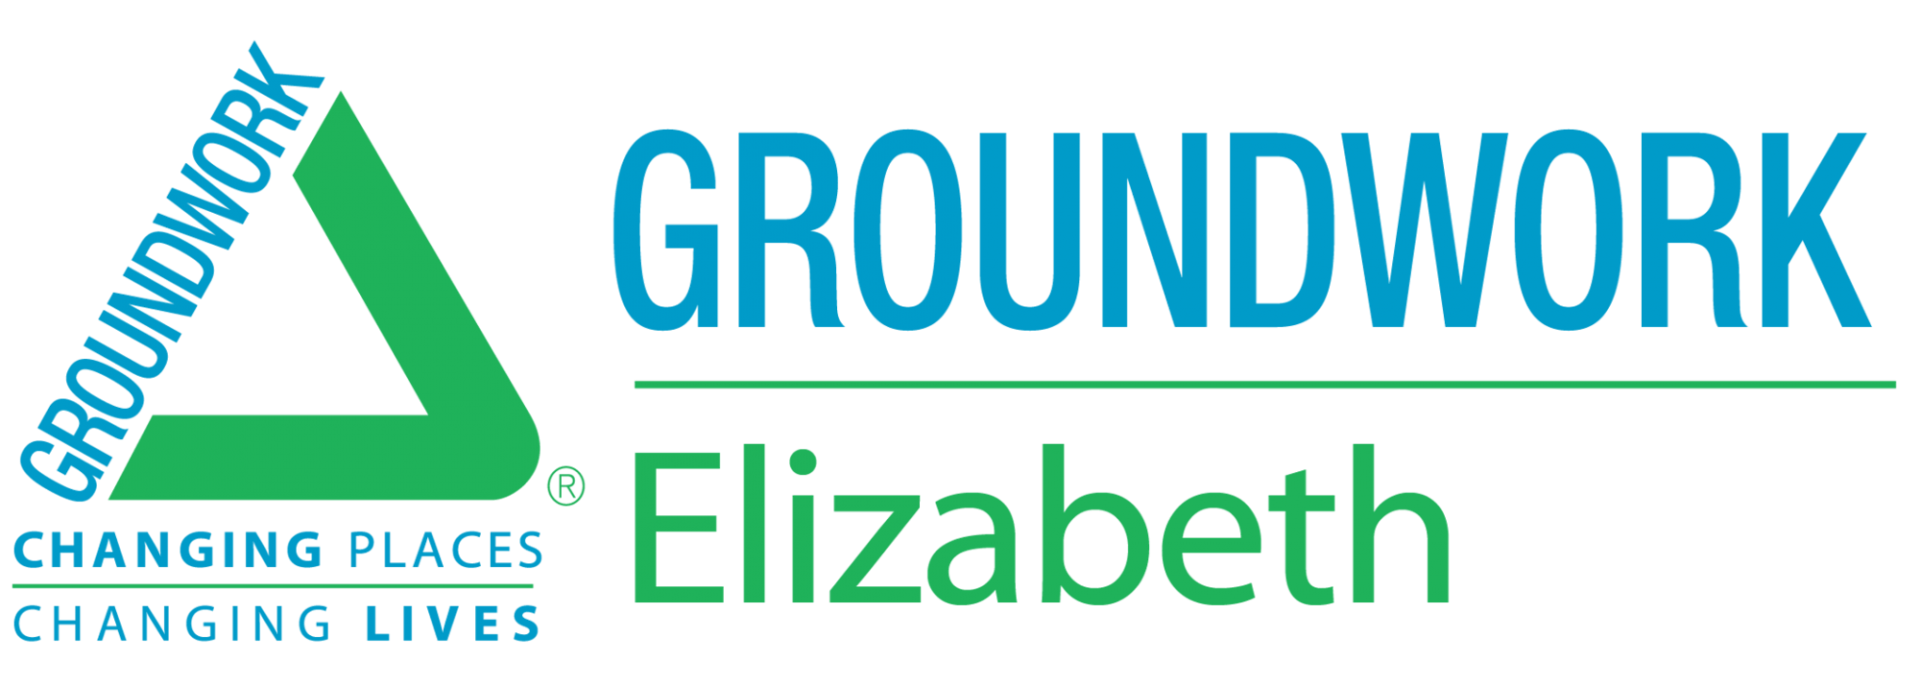 Groundwork Elizabeth Logo